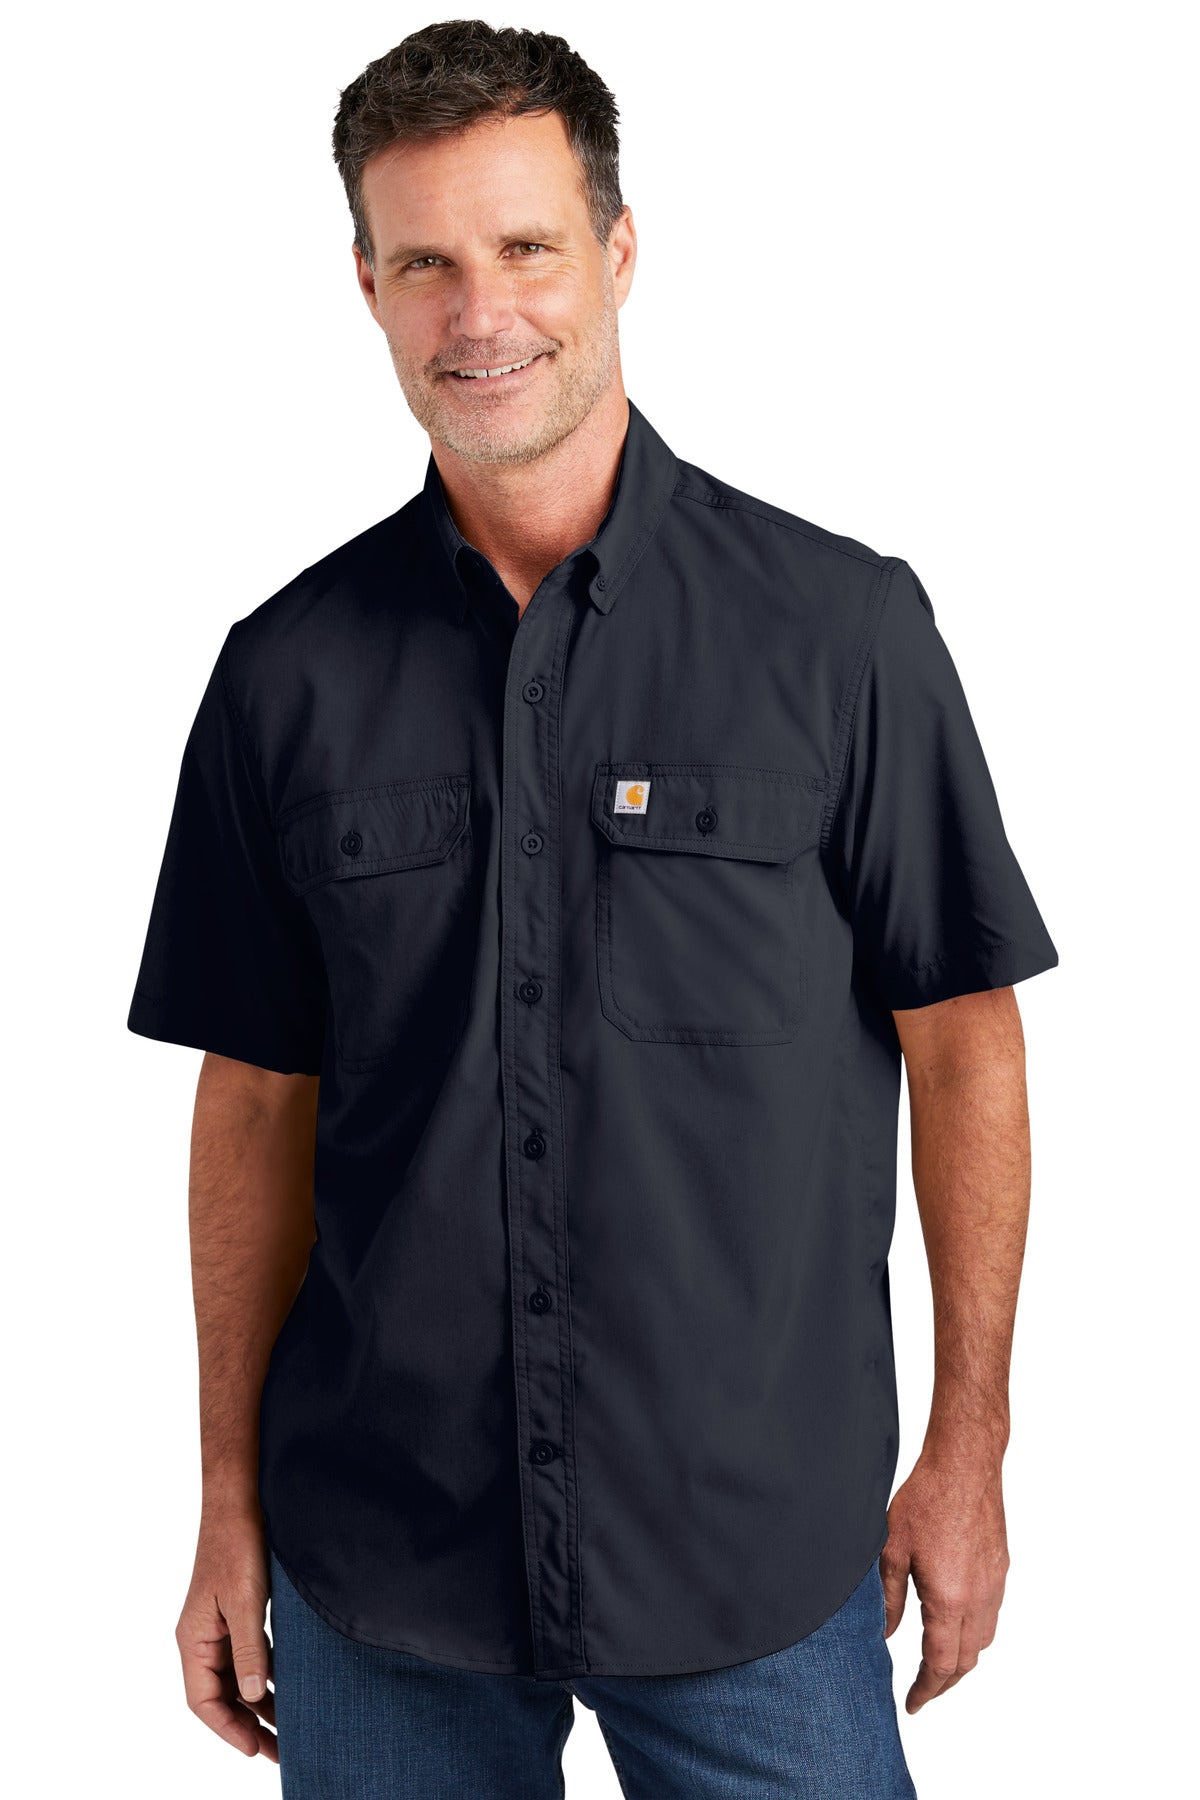 Carhartt Force Solid Short Sleeve Shirt CT105292